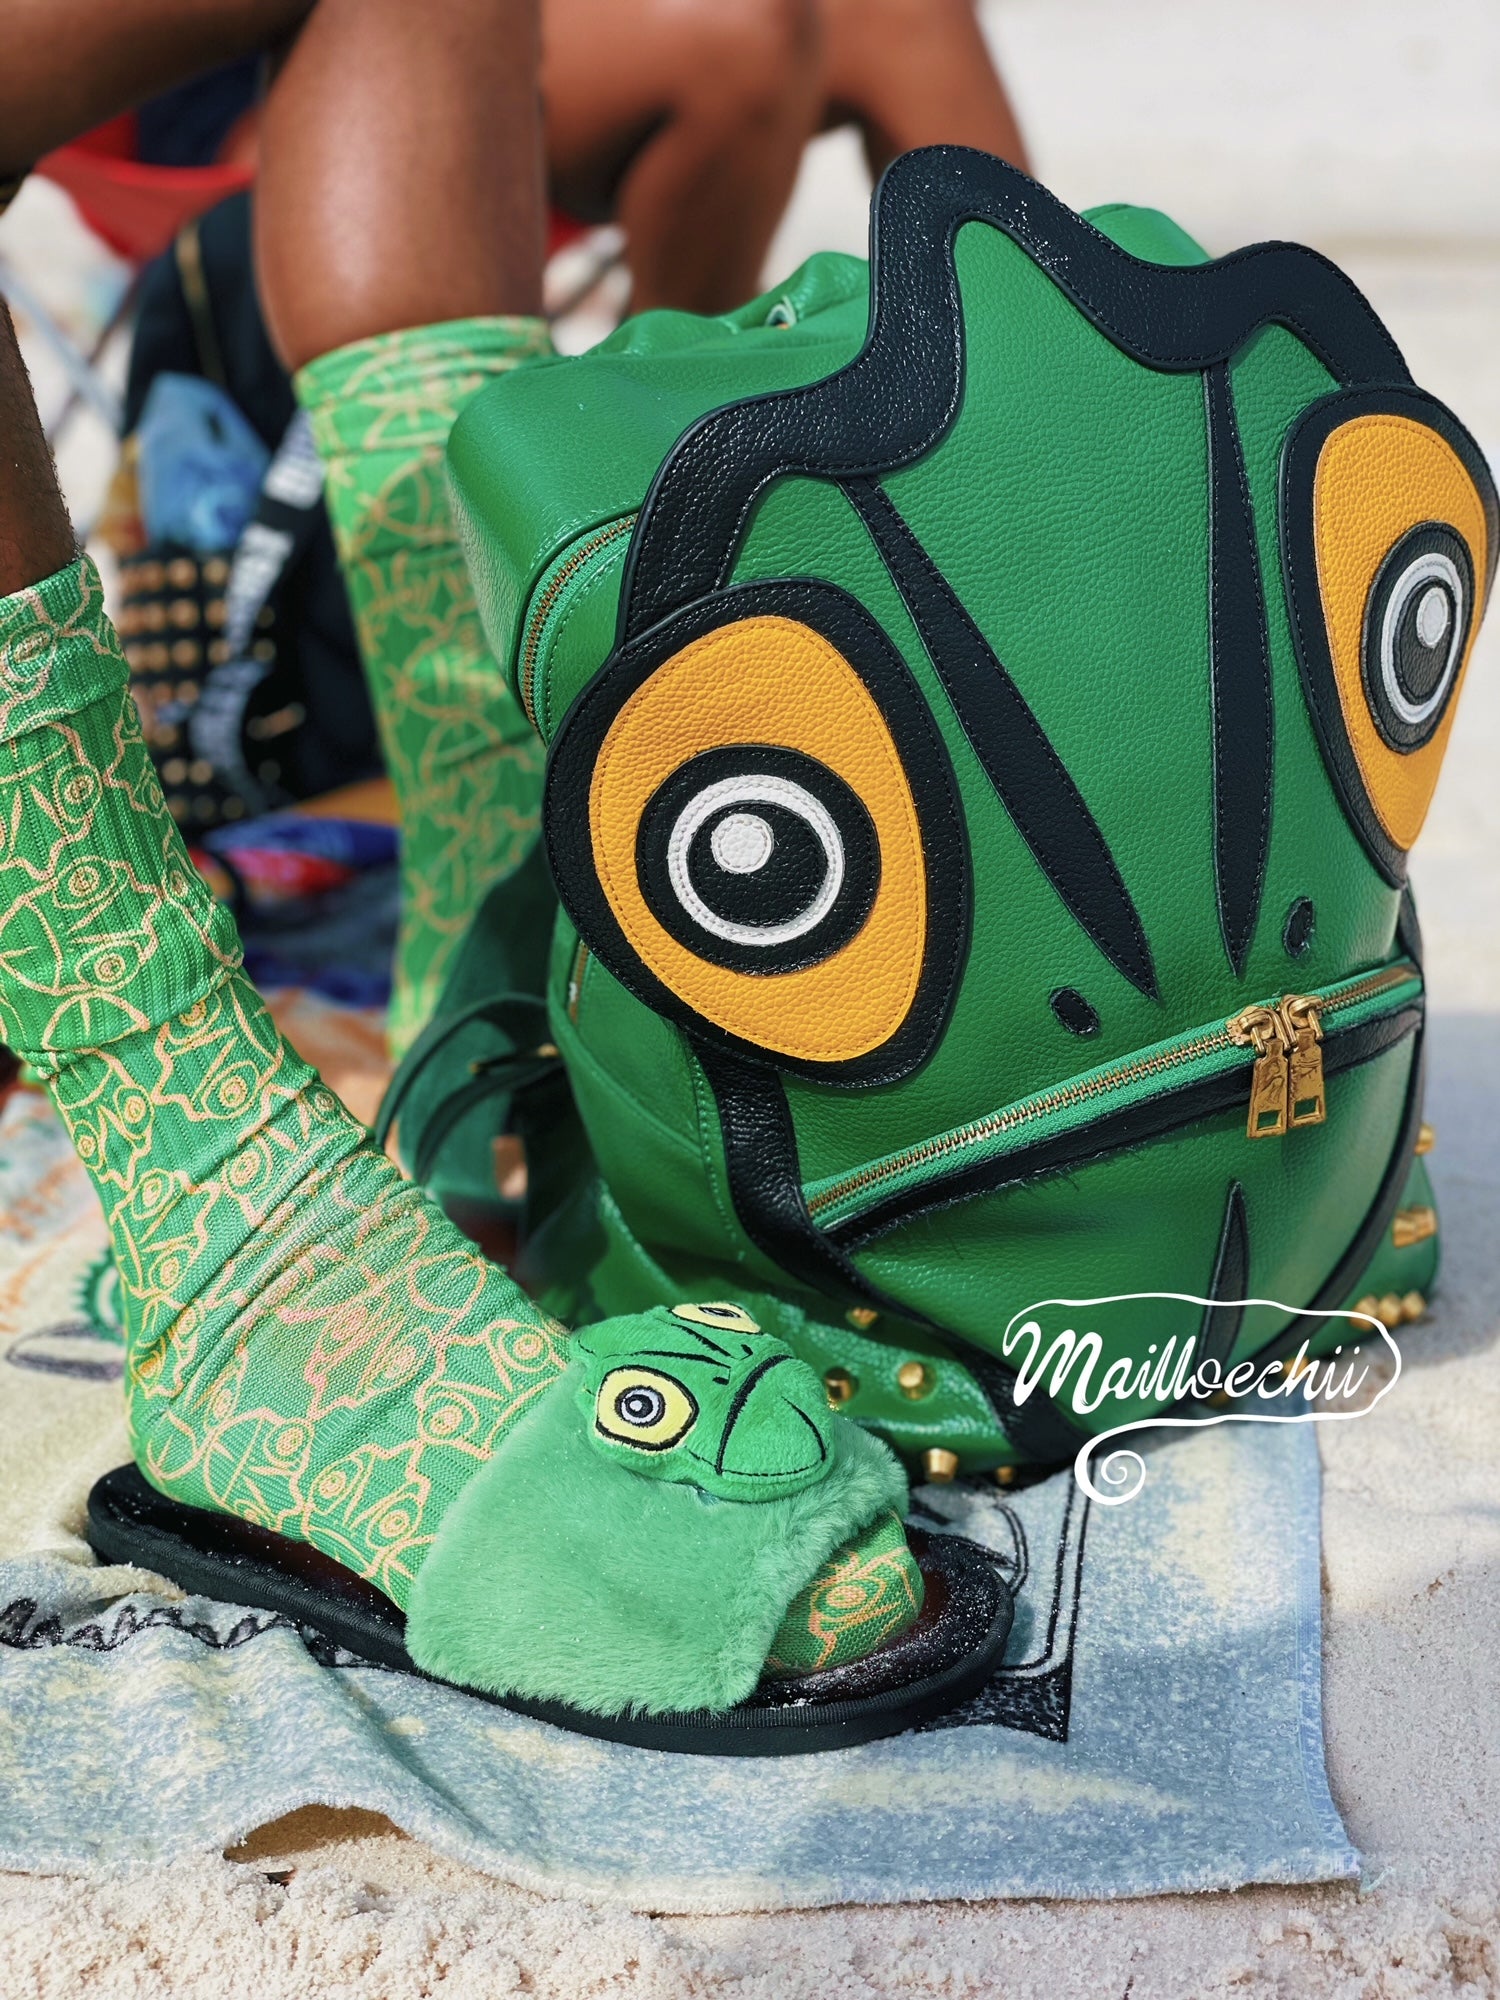 Mailloechii X Air Chameleon Iridescent Holographic Duffel Bag